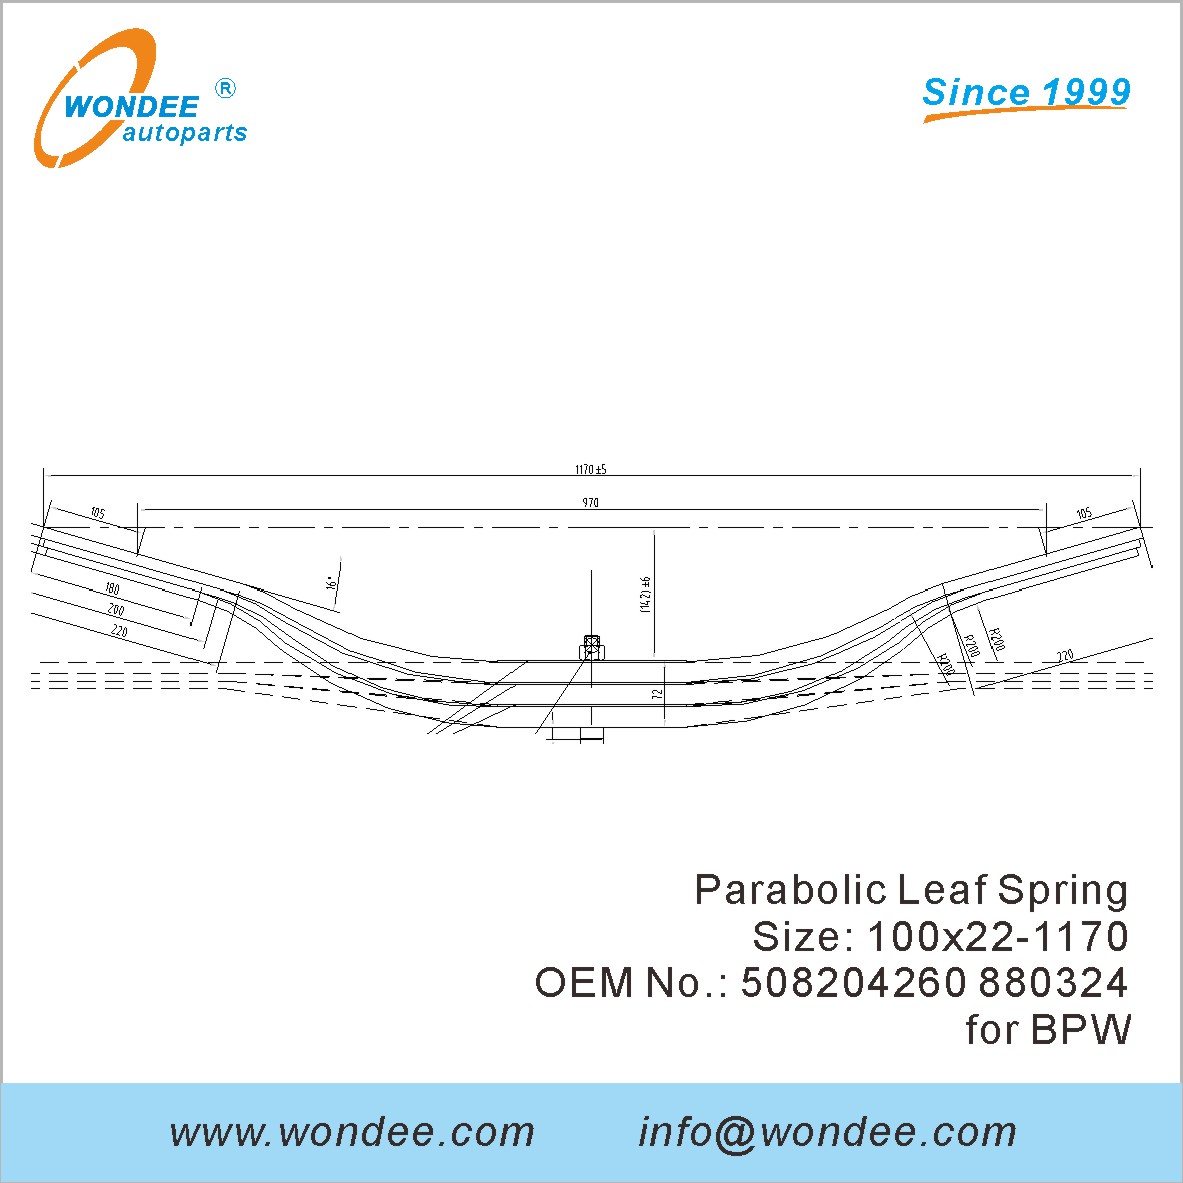 WONDEE light duty parabolic Leaf Spring OEM 508204260 880324 for BPW